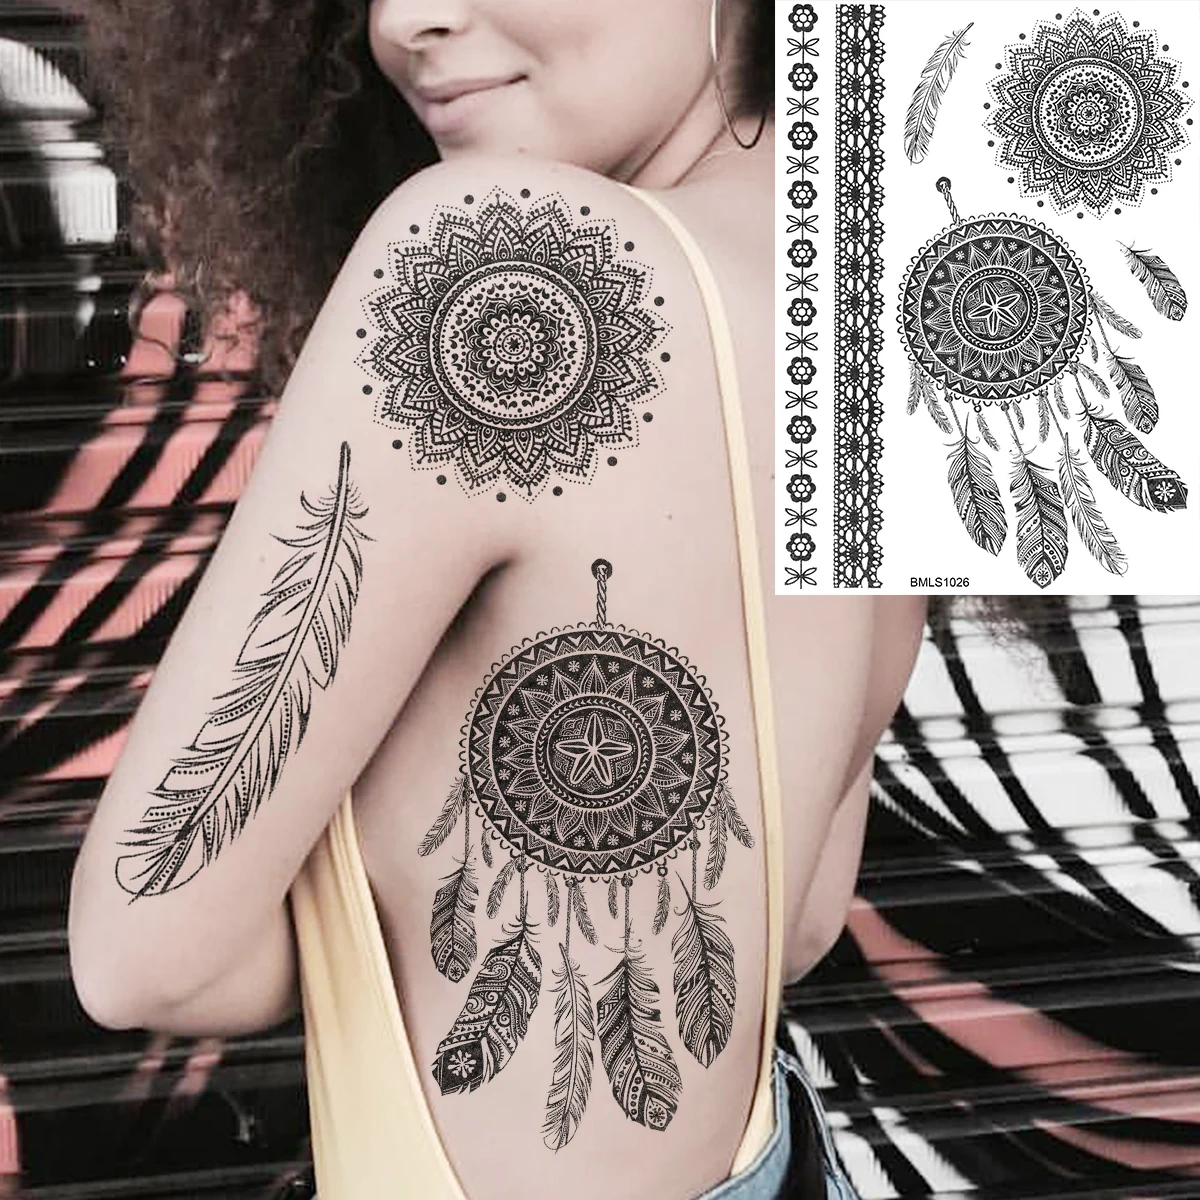 Share 150+ boho tattoo temporary